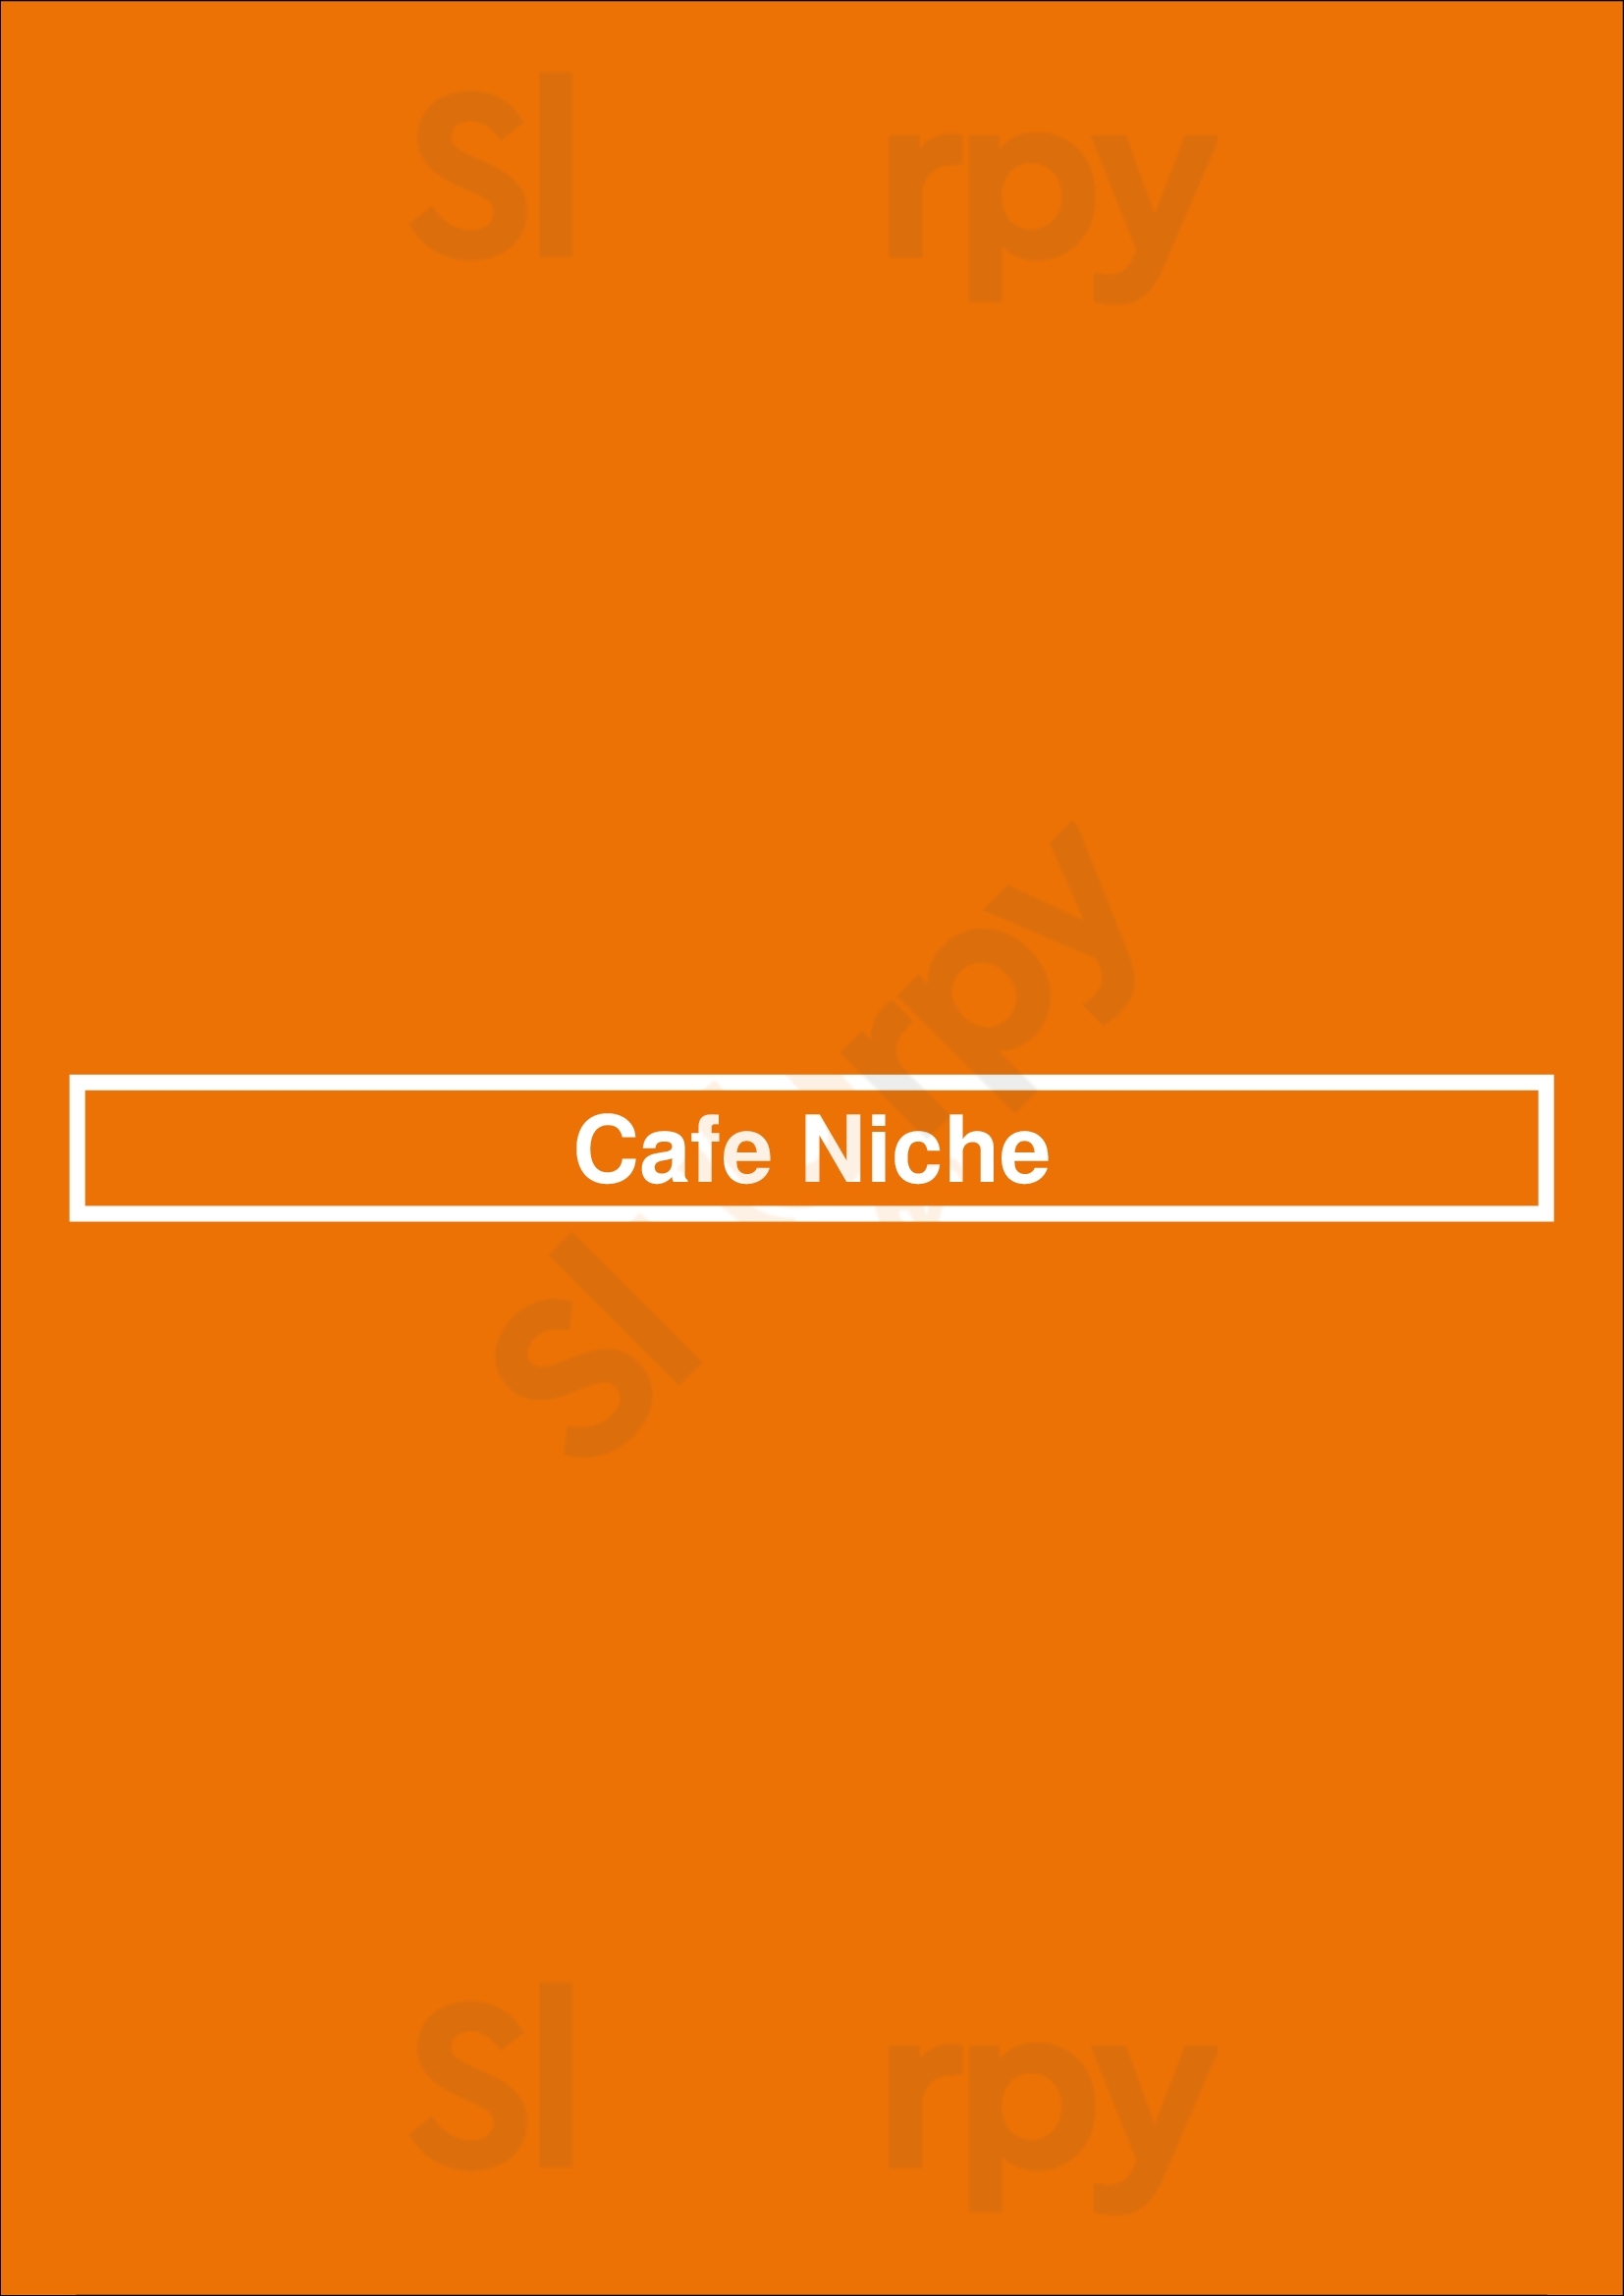 Cafe Niche Salt Lake City Menu - 1